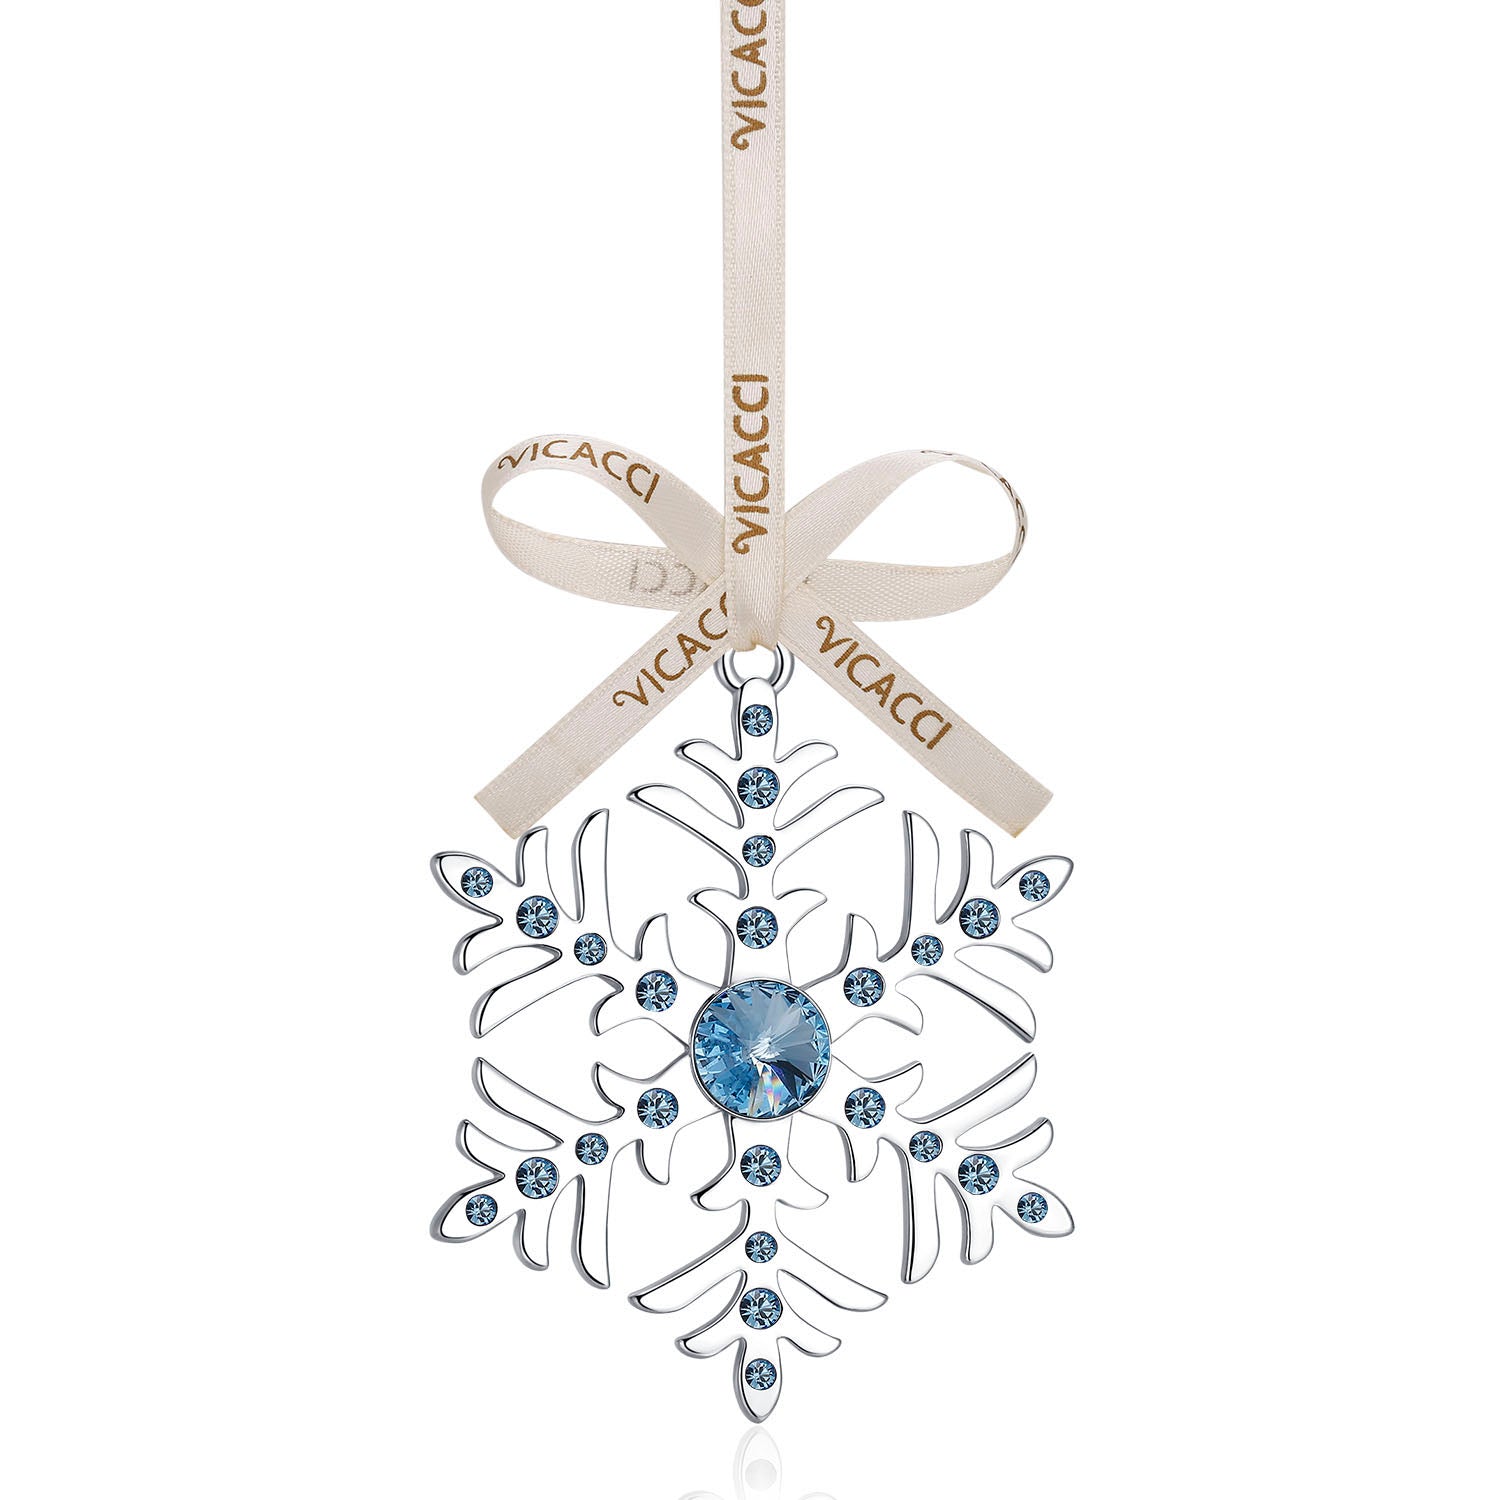 Vicacci Plated Metal Snowflake Christmas Tree Charm